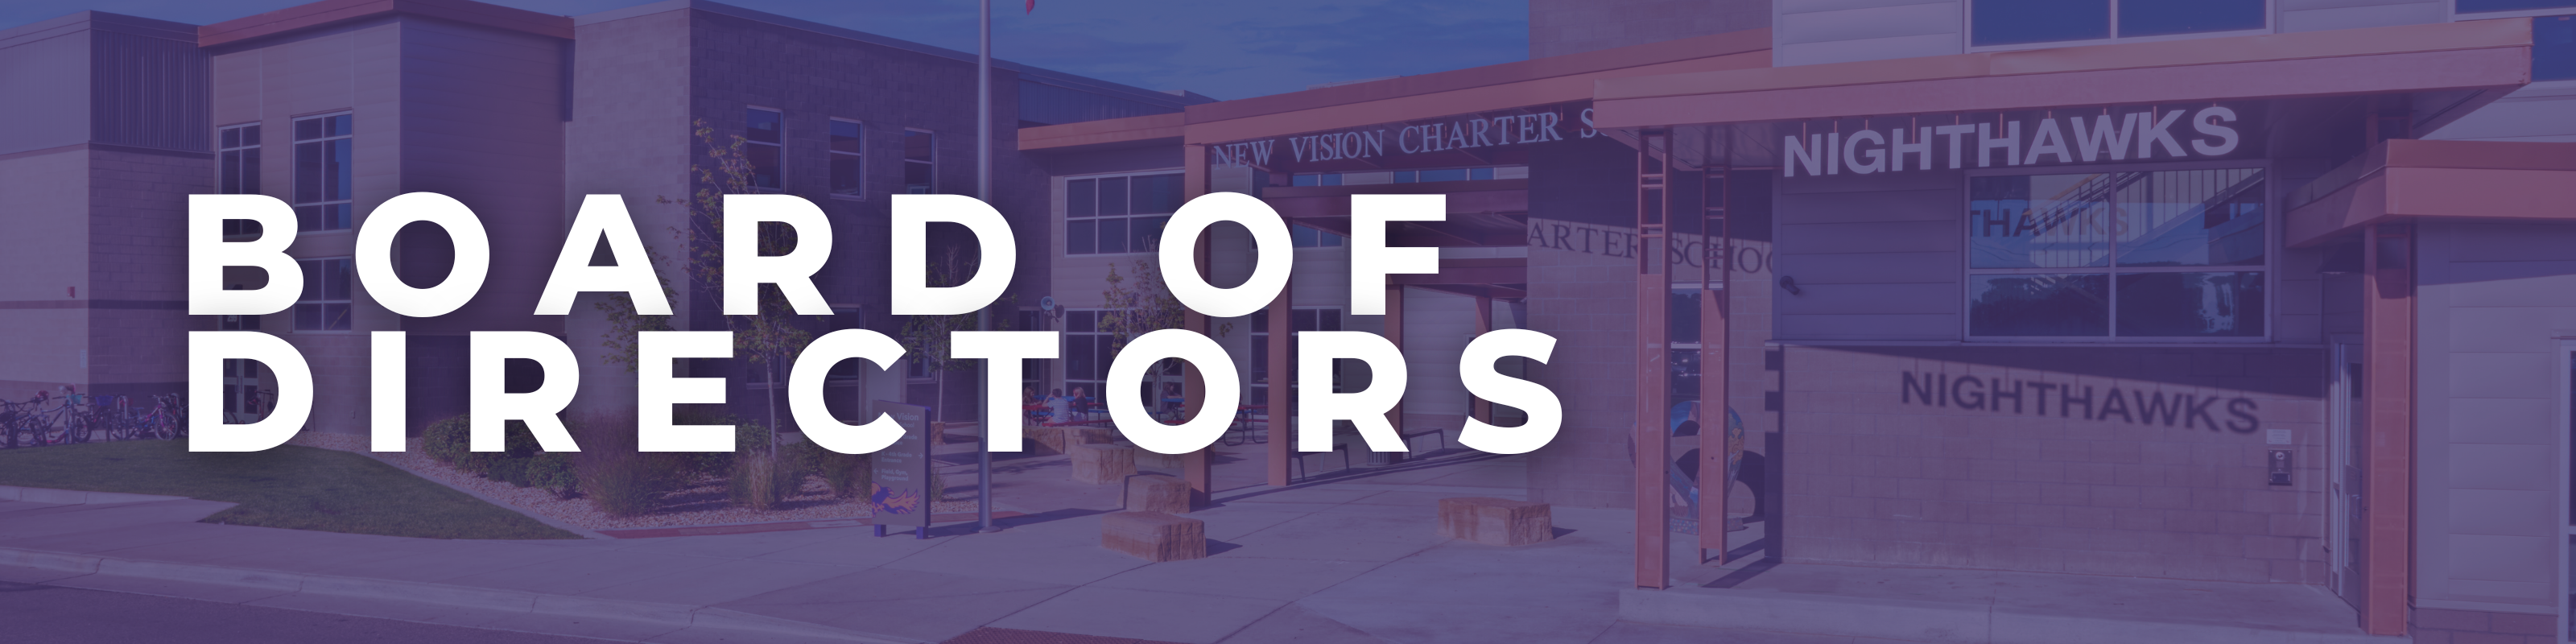 New Vision Charter School Board of Directors